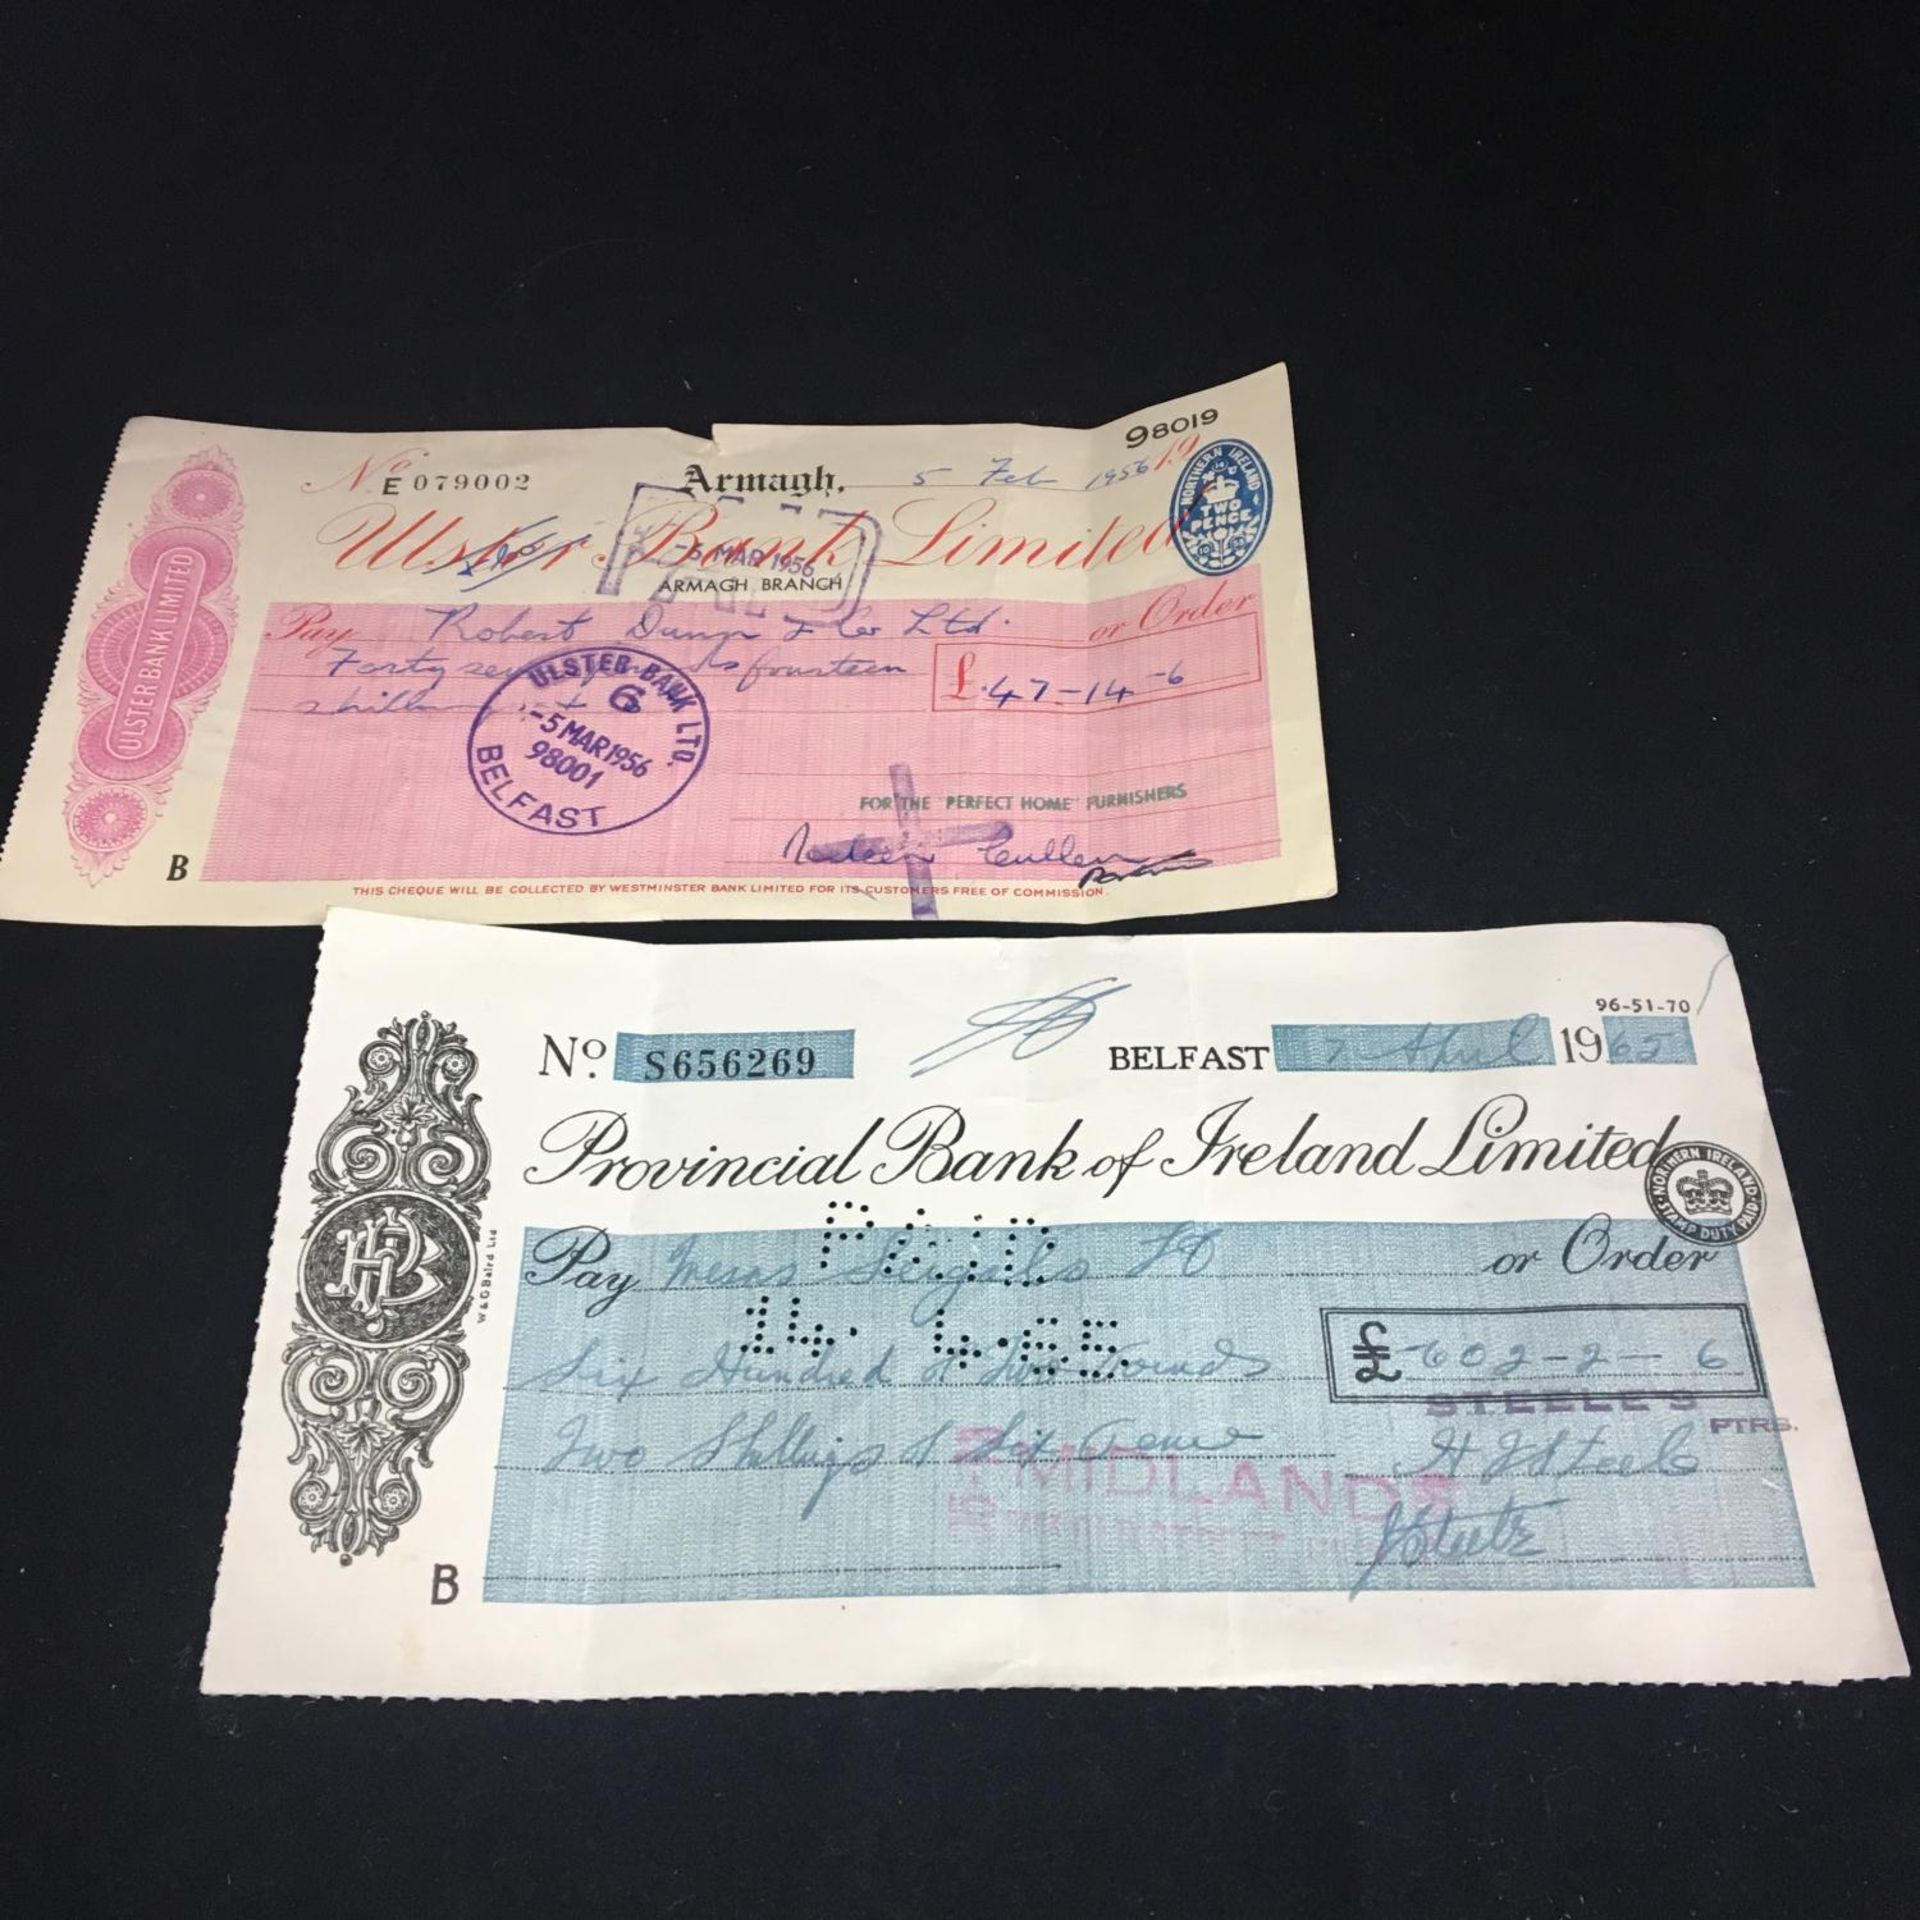 Vintage 1950s 1960s Northen Irish ephemera - bank cheques. Includes free UK delivery.